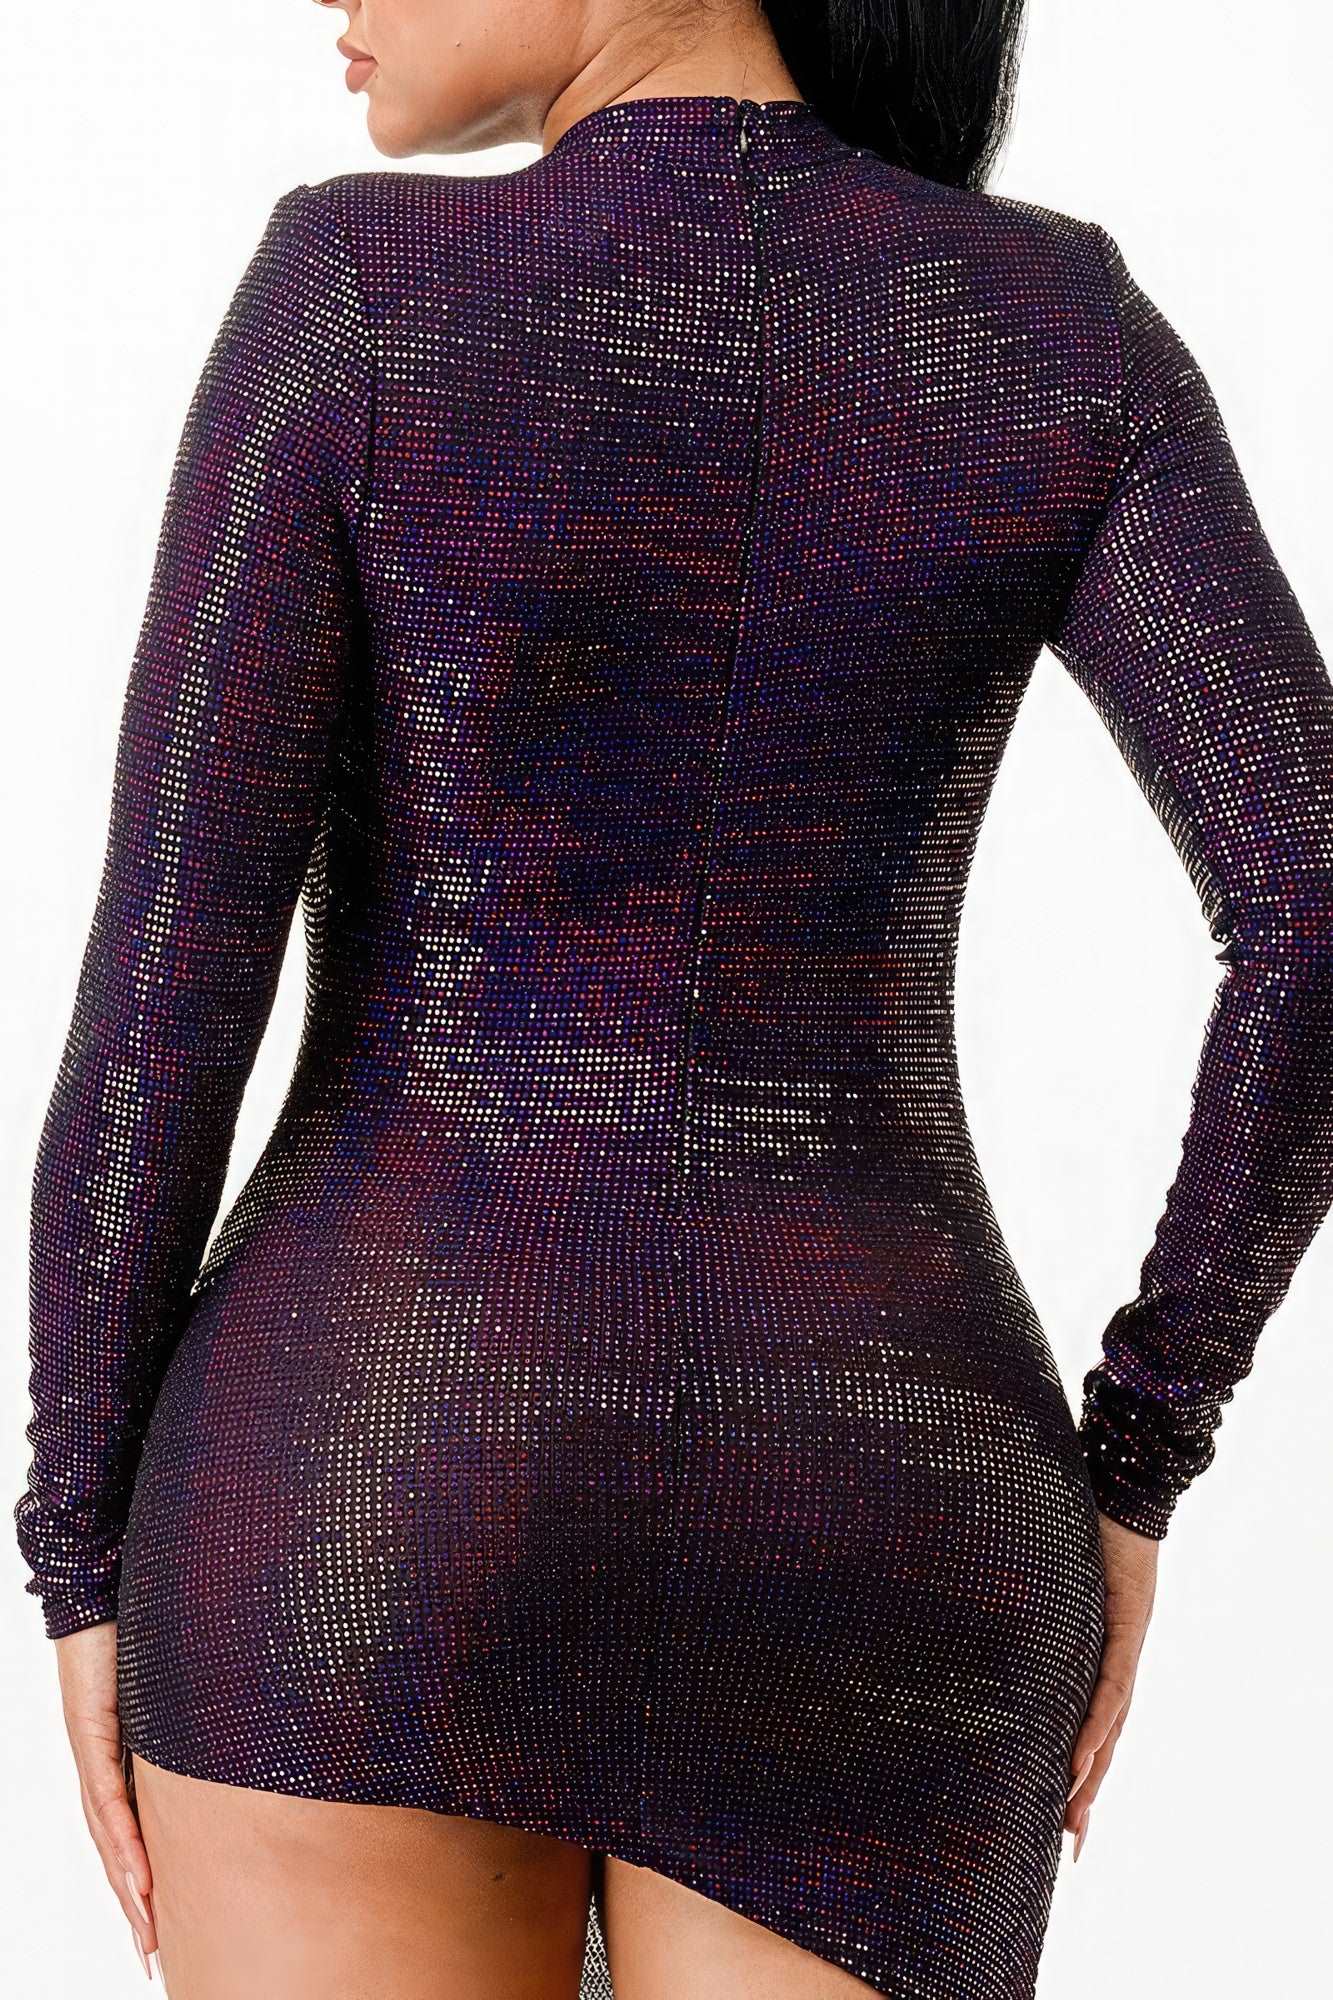 Knitted Sequin Night Dress Unbalanced Skirt Enhance Your Evening Look